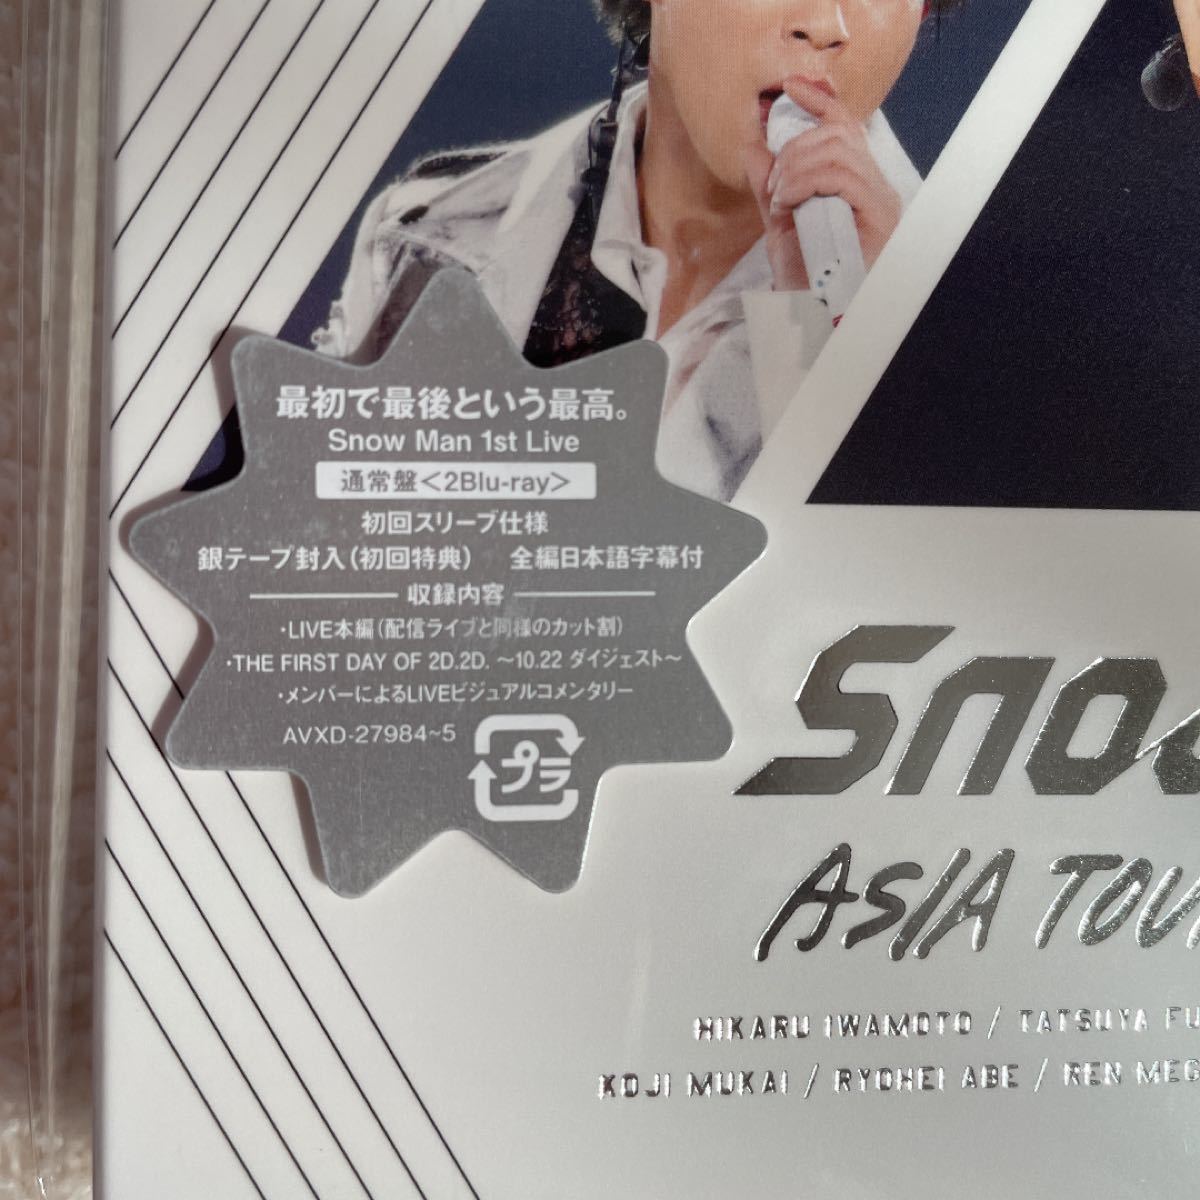 Snow Man ASIA TOUR 2D 2D Blu-ray 初回盤＋通常盤(初回仕様) 新品未